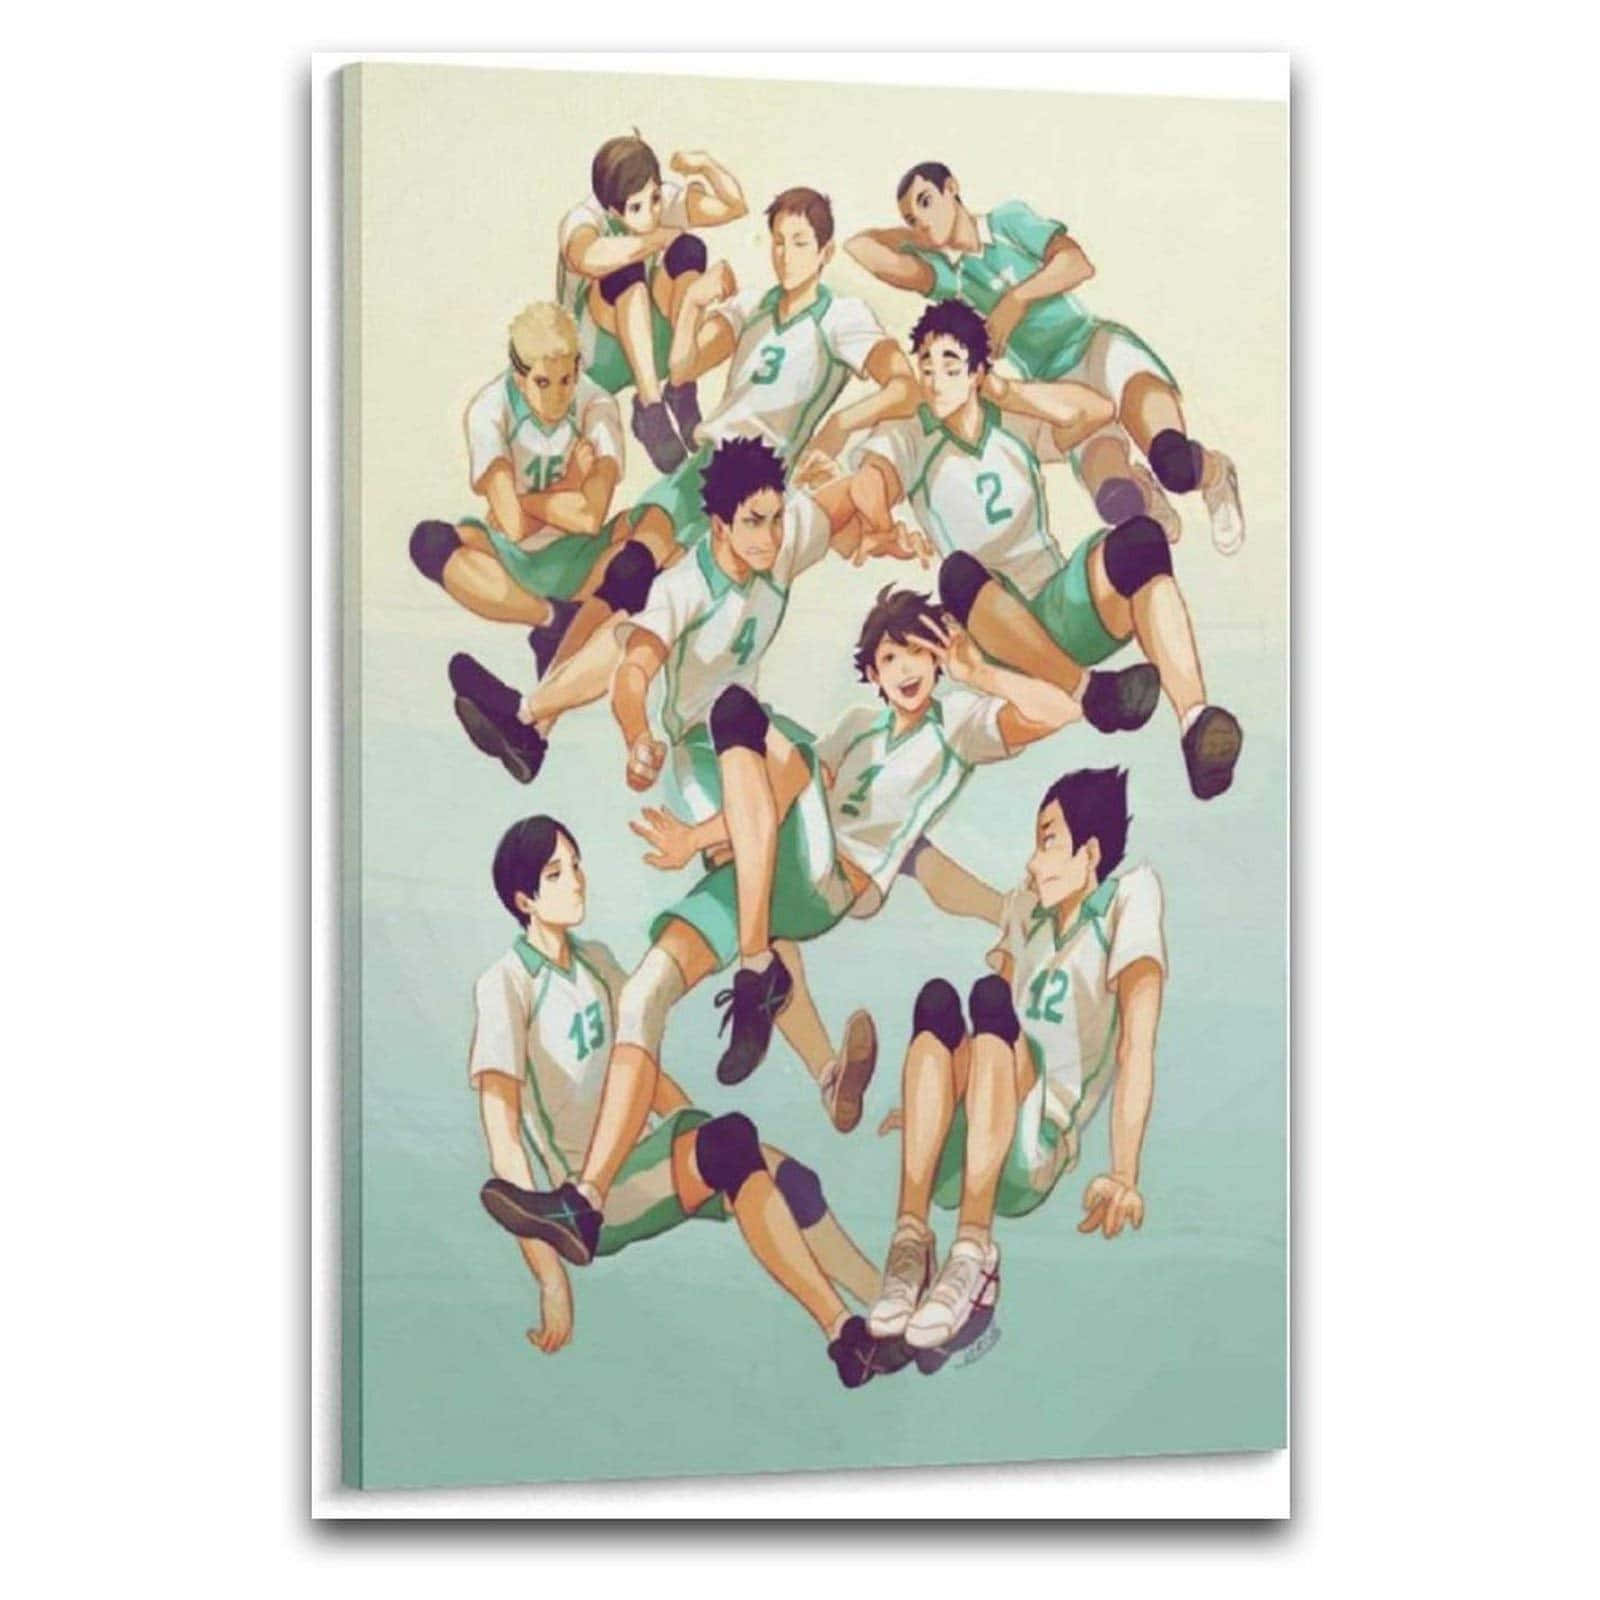 Aoba Johsai High Volleyball Team Painting Wallpaper